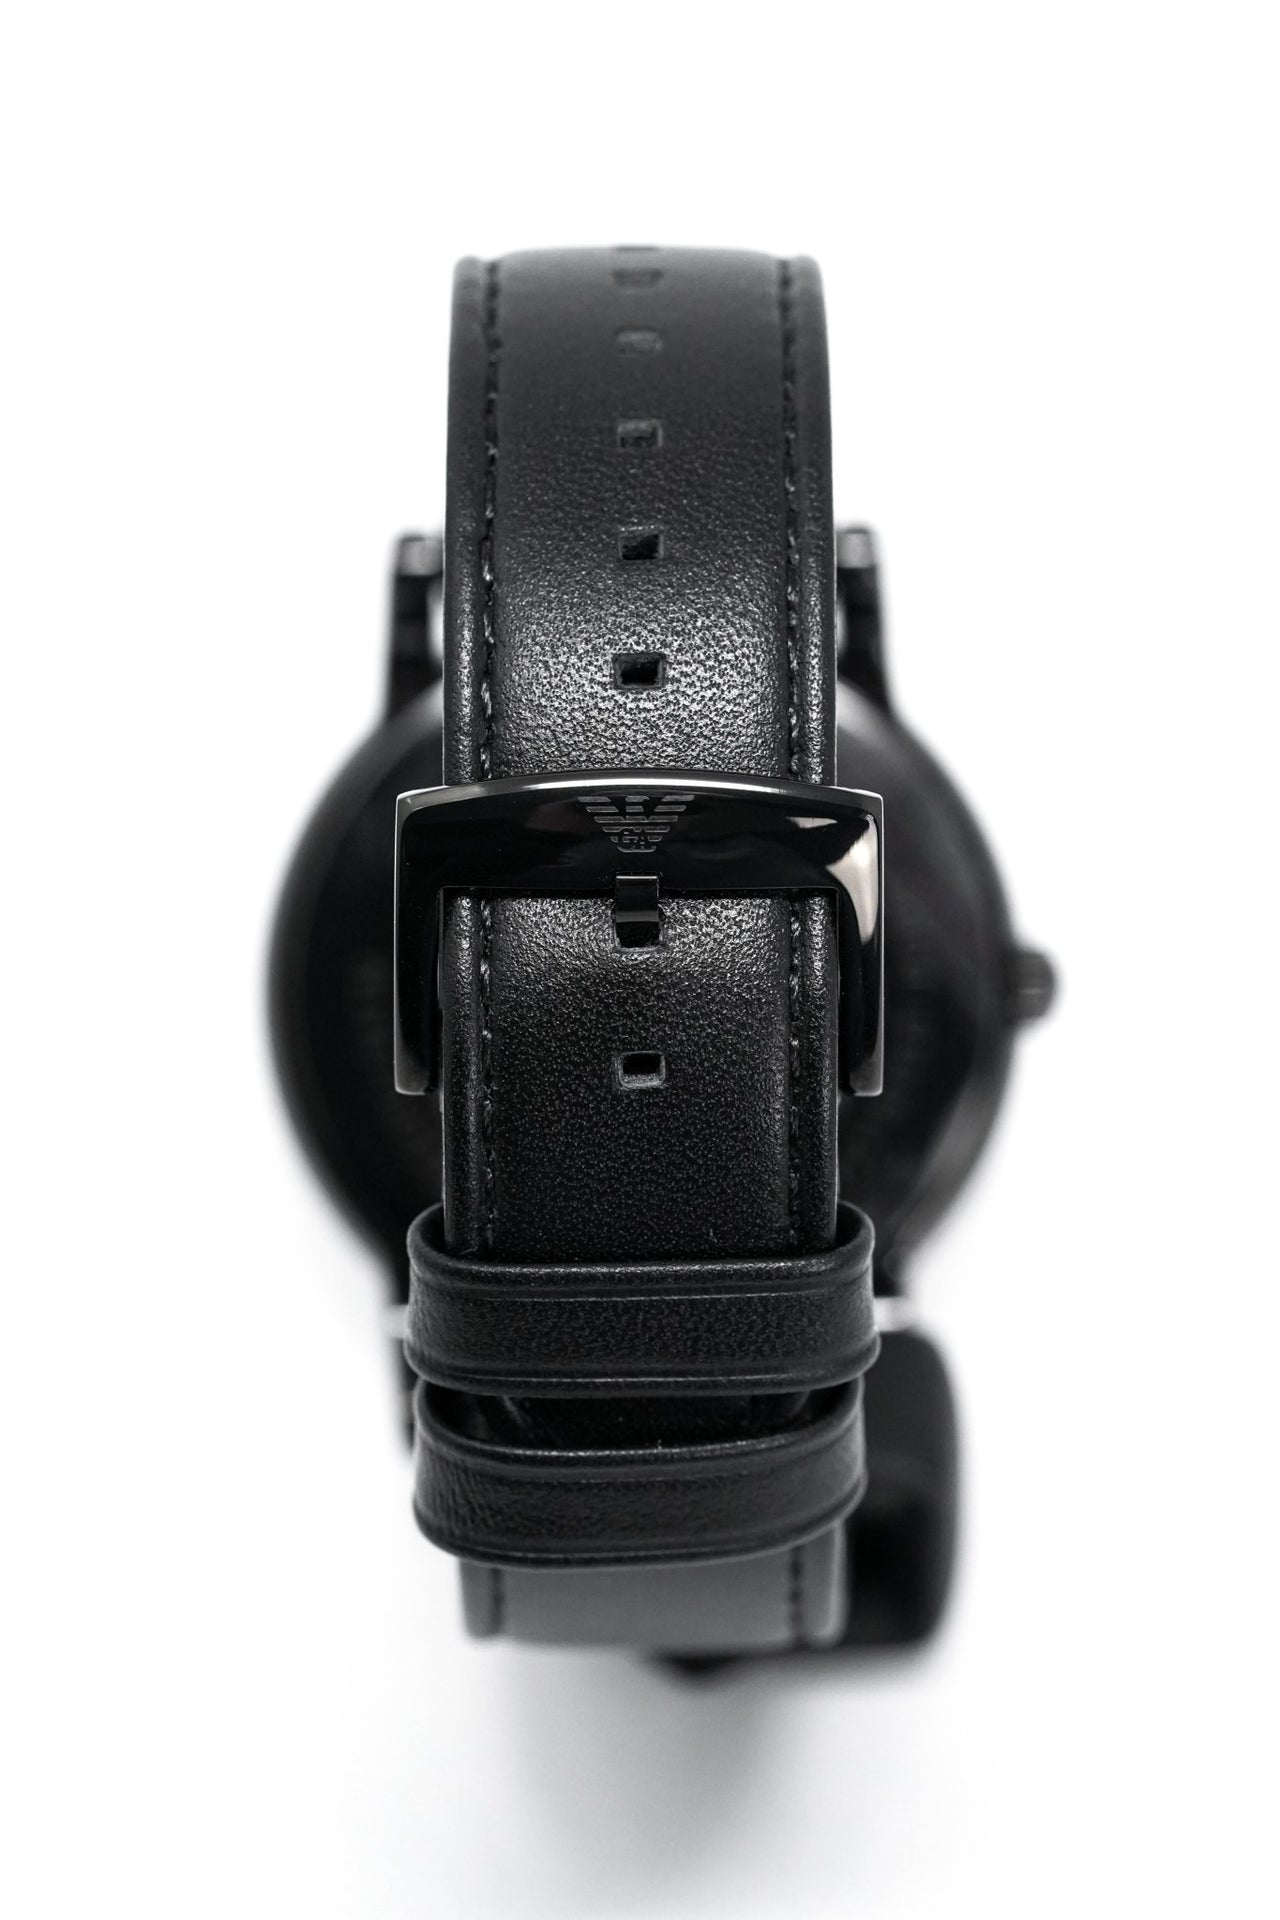 Emporio Armani Men's Classic Watch Black PVD AR1732 - Watches & Crystals